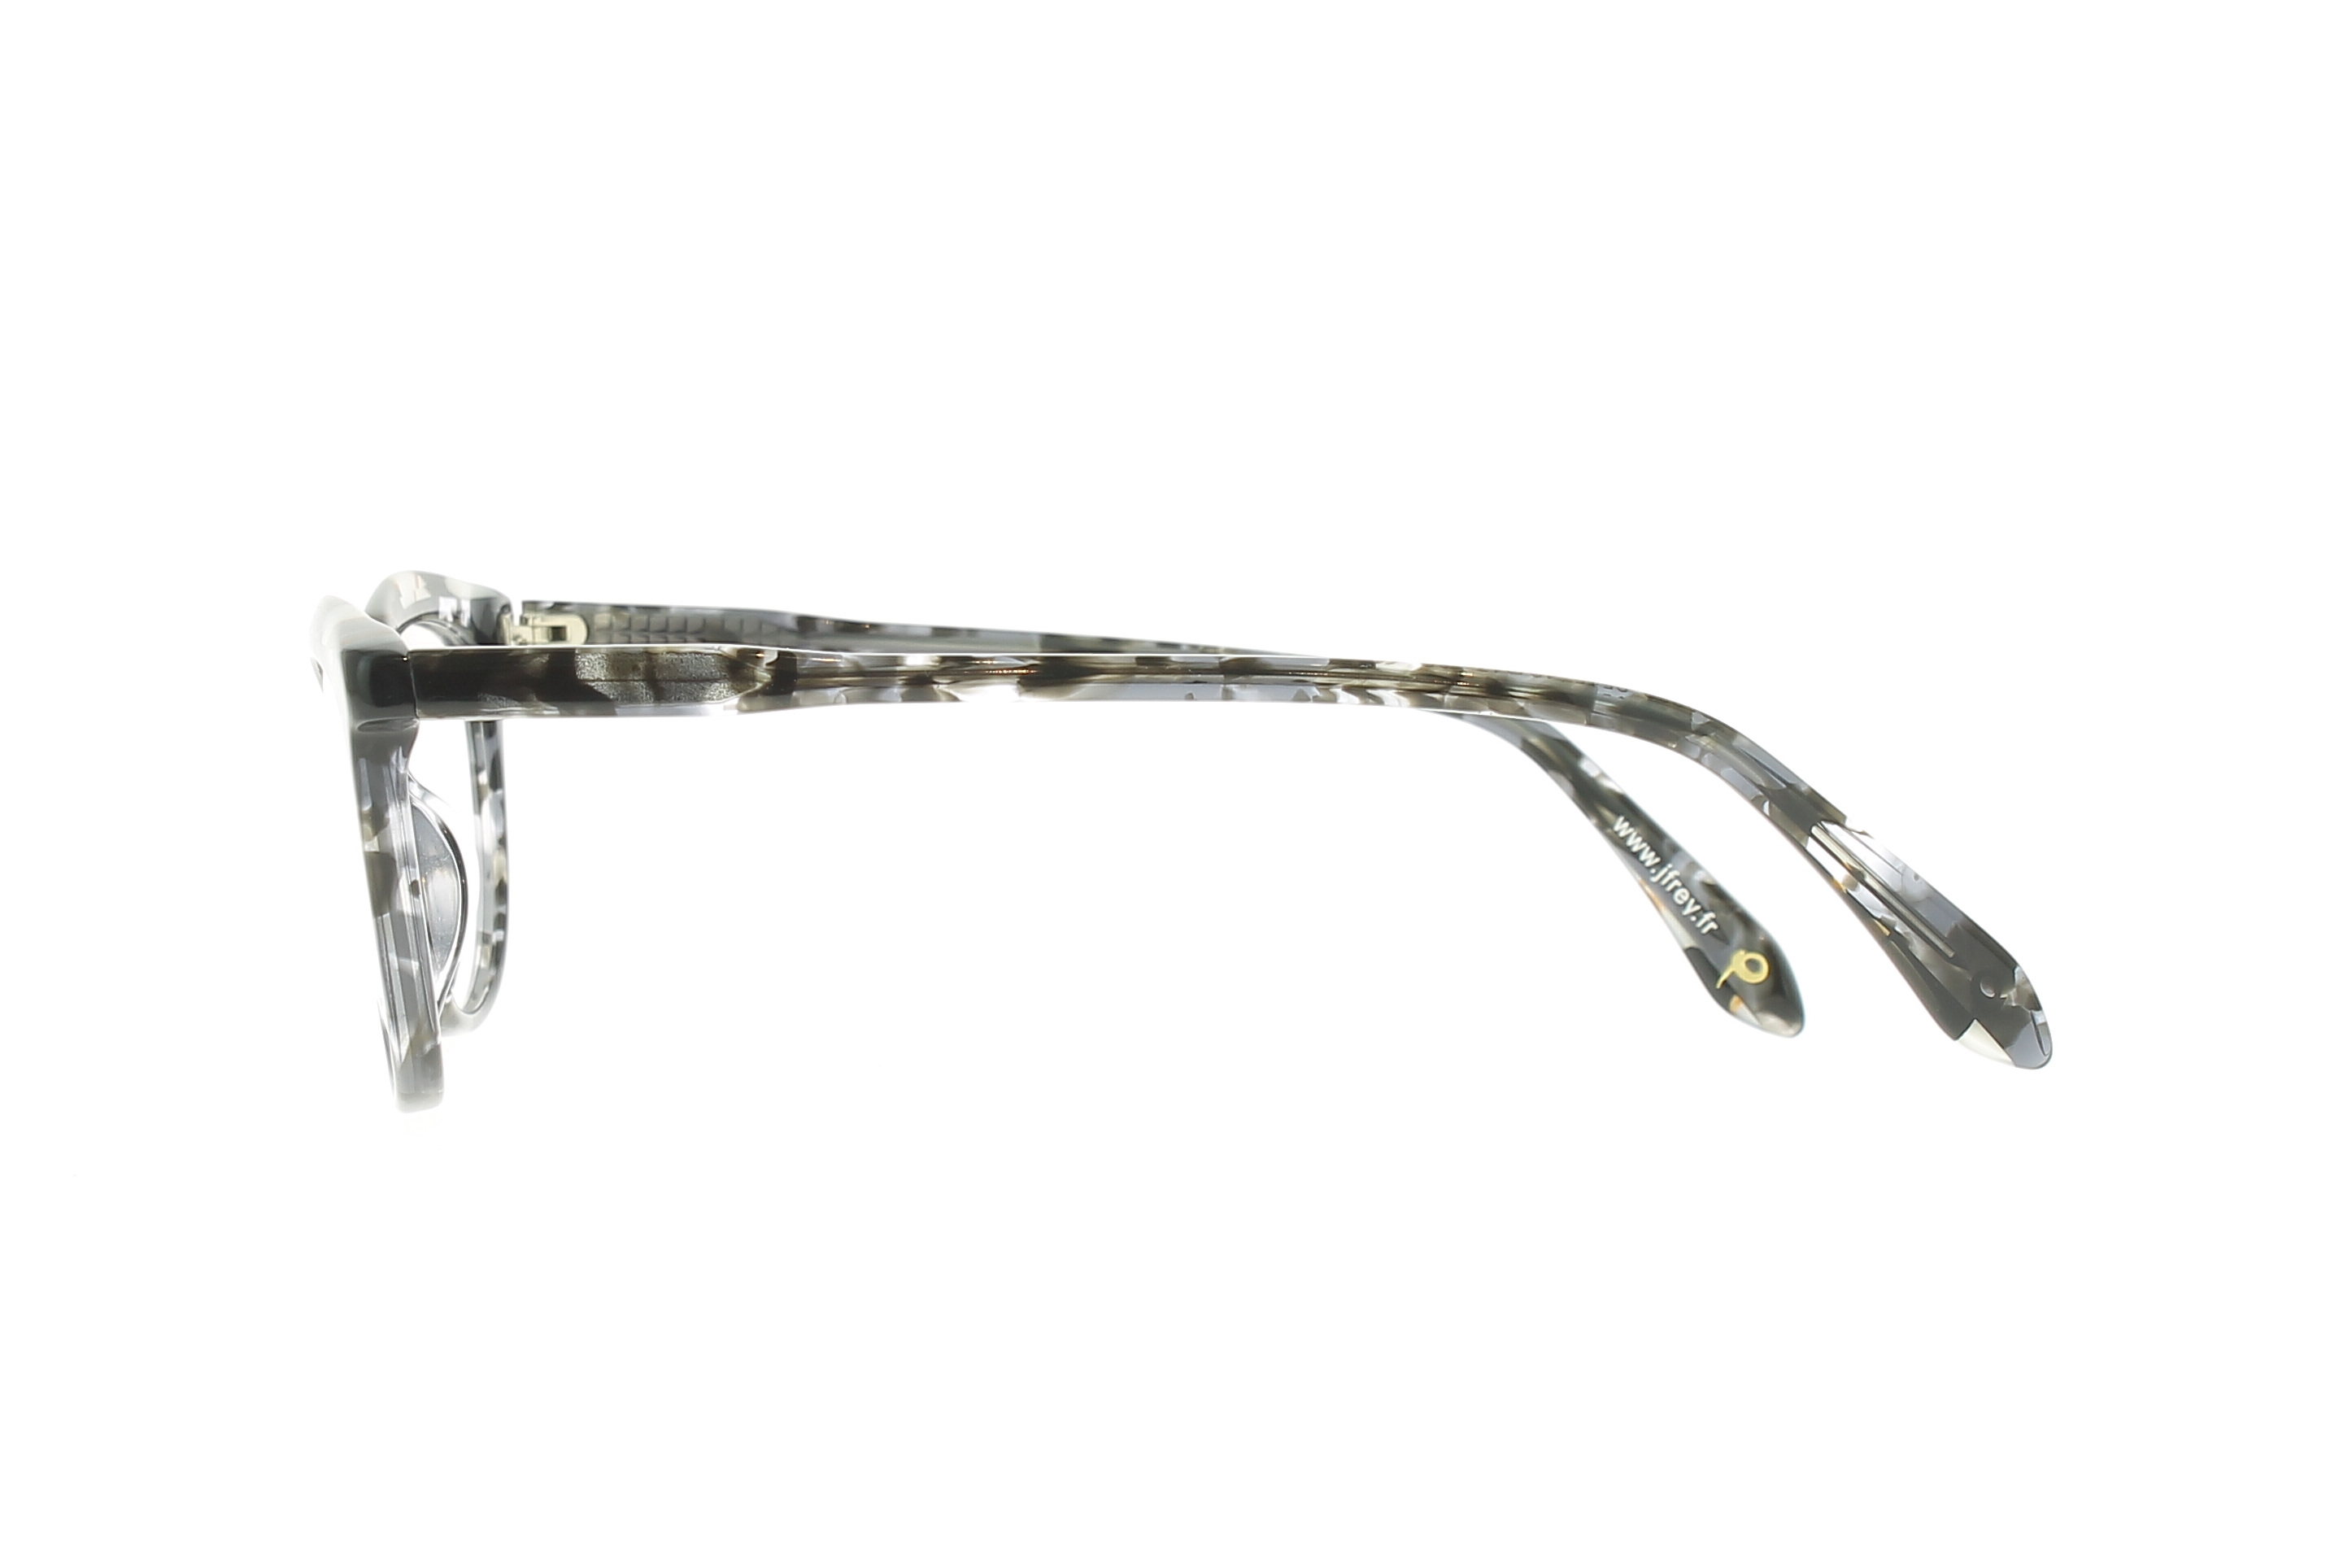 Glasses Jf-rey-petite Pa060, black colour - Doyle